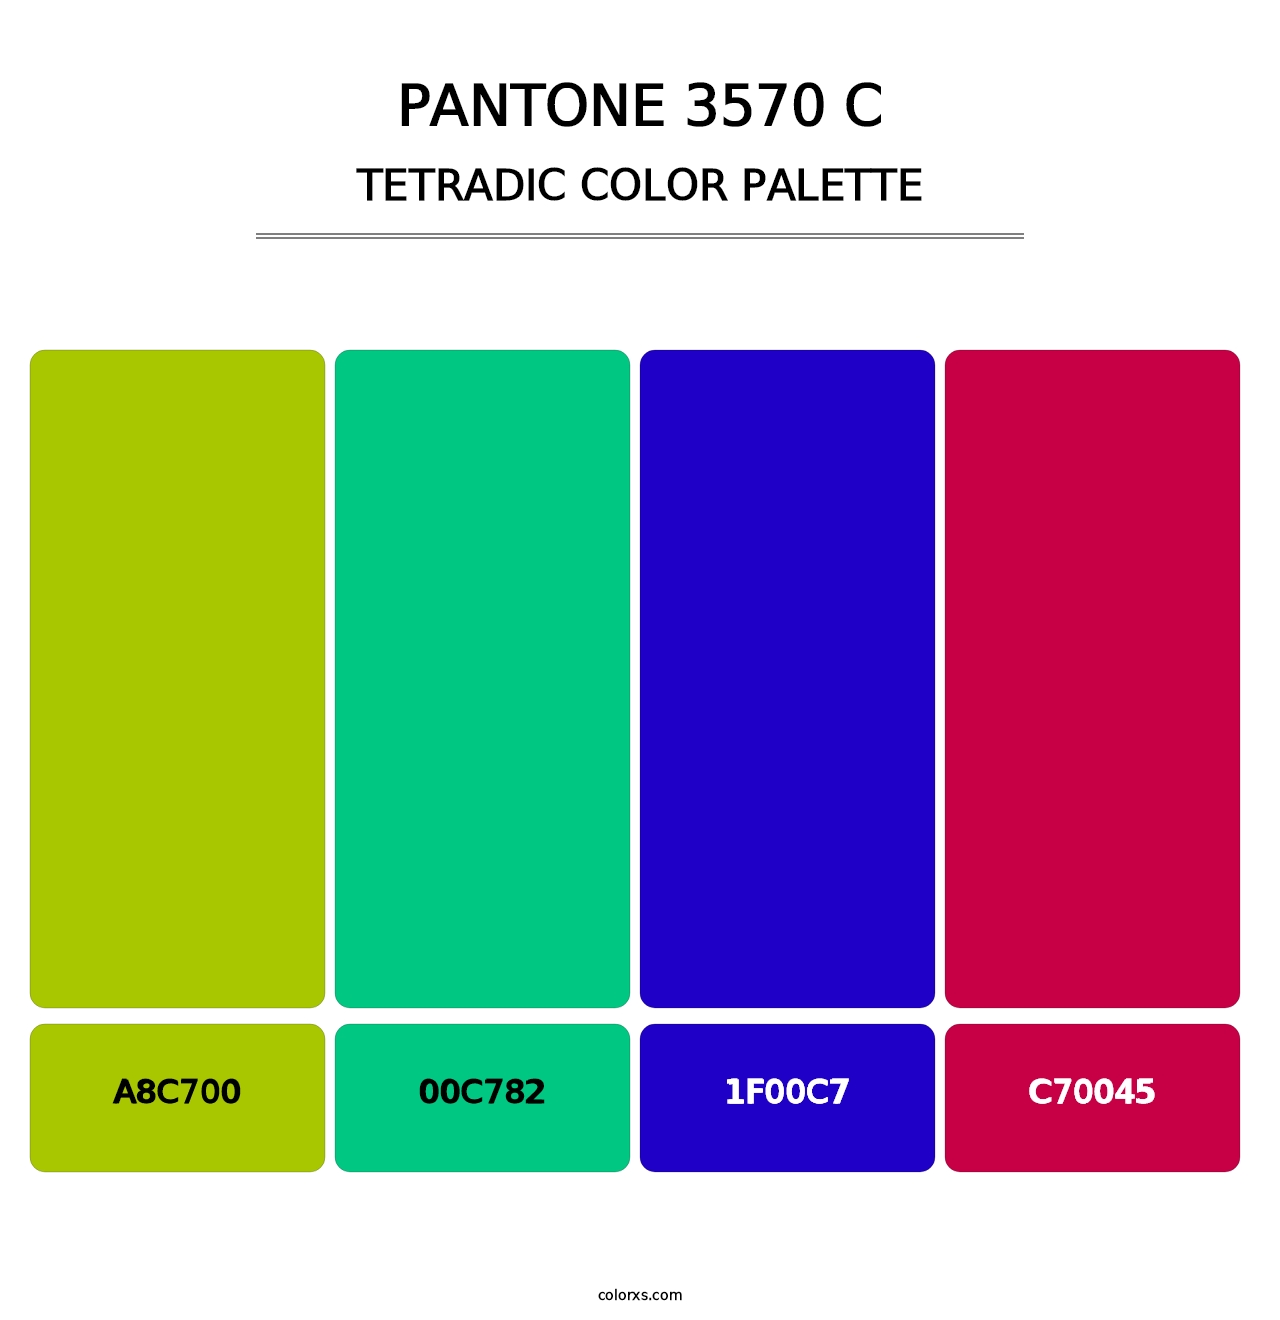 PANTONE 3570 C - Tetradic Color Palette